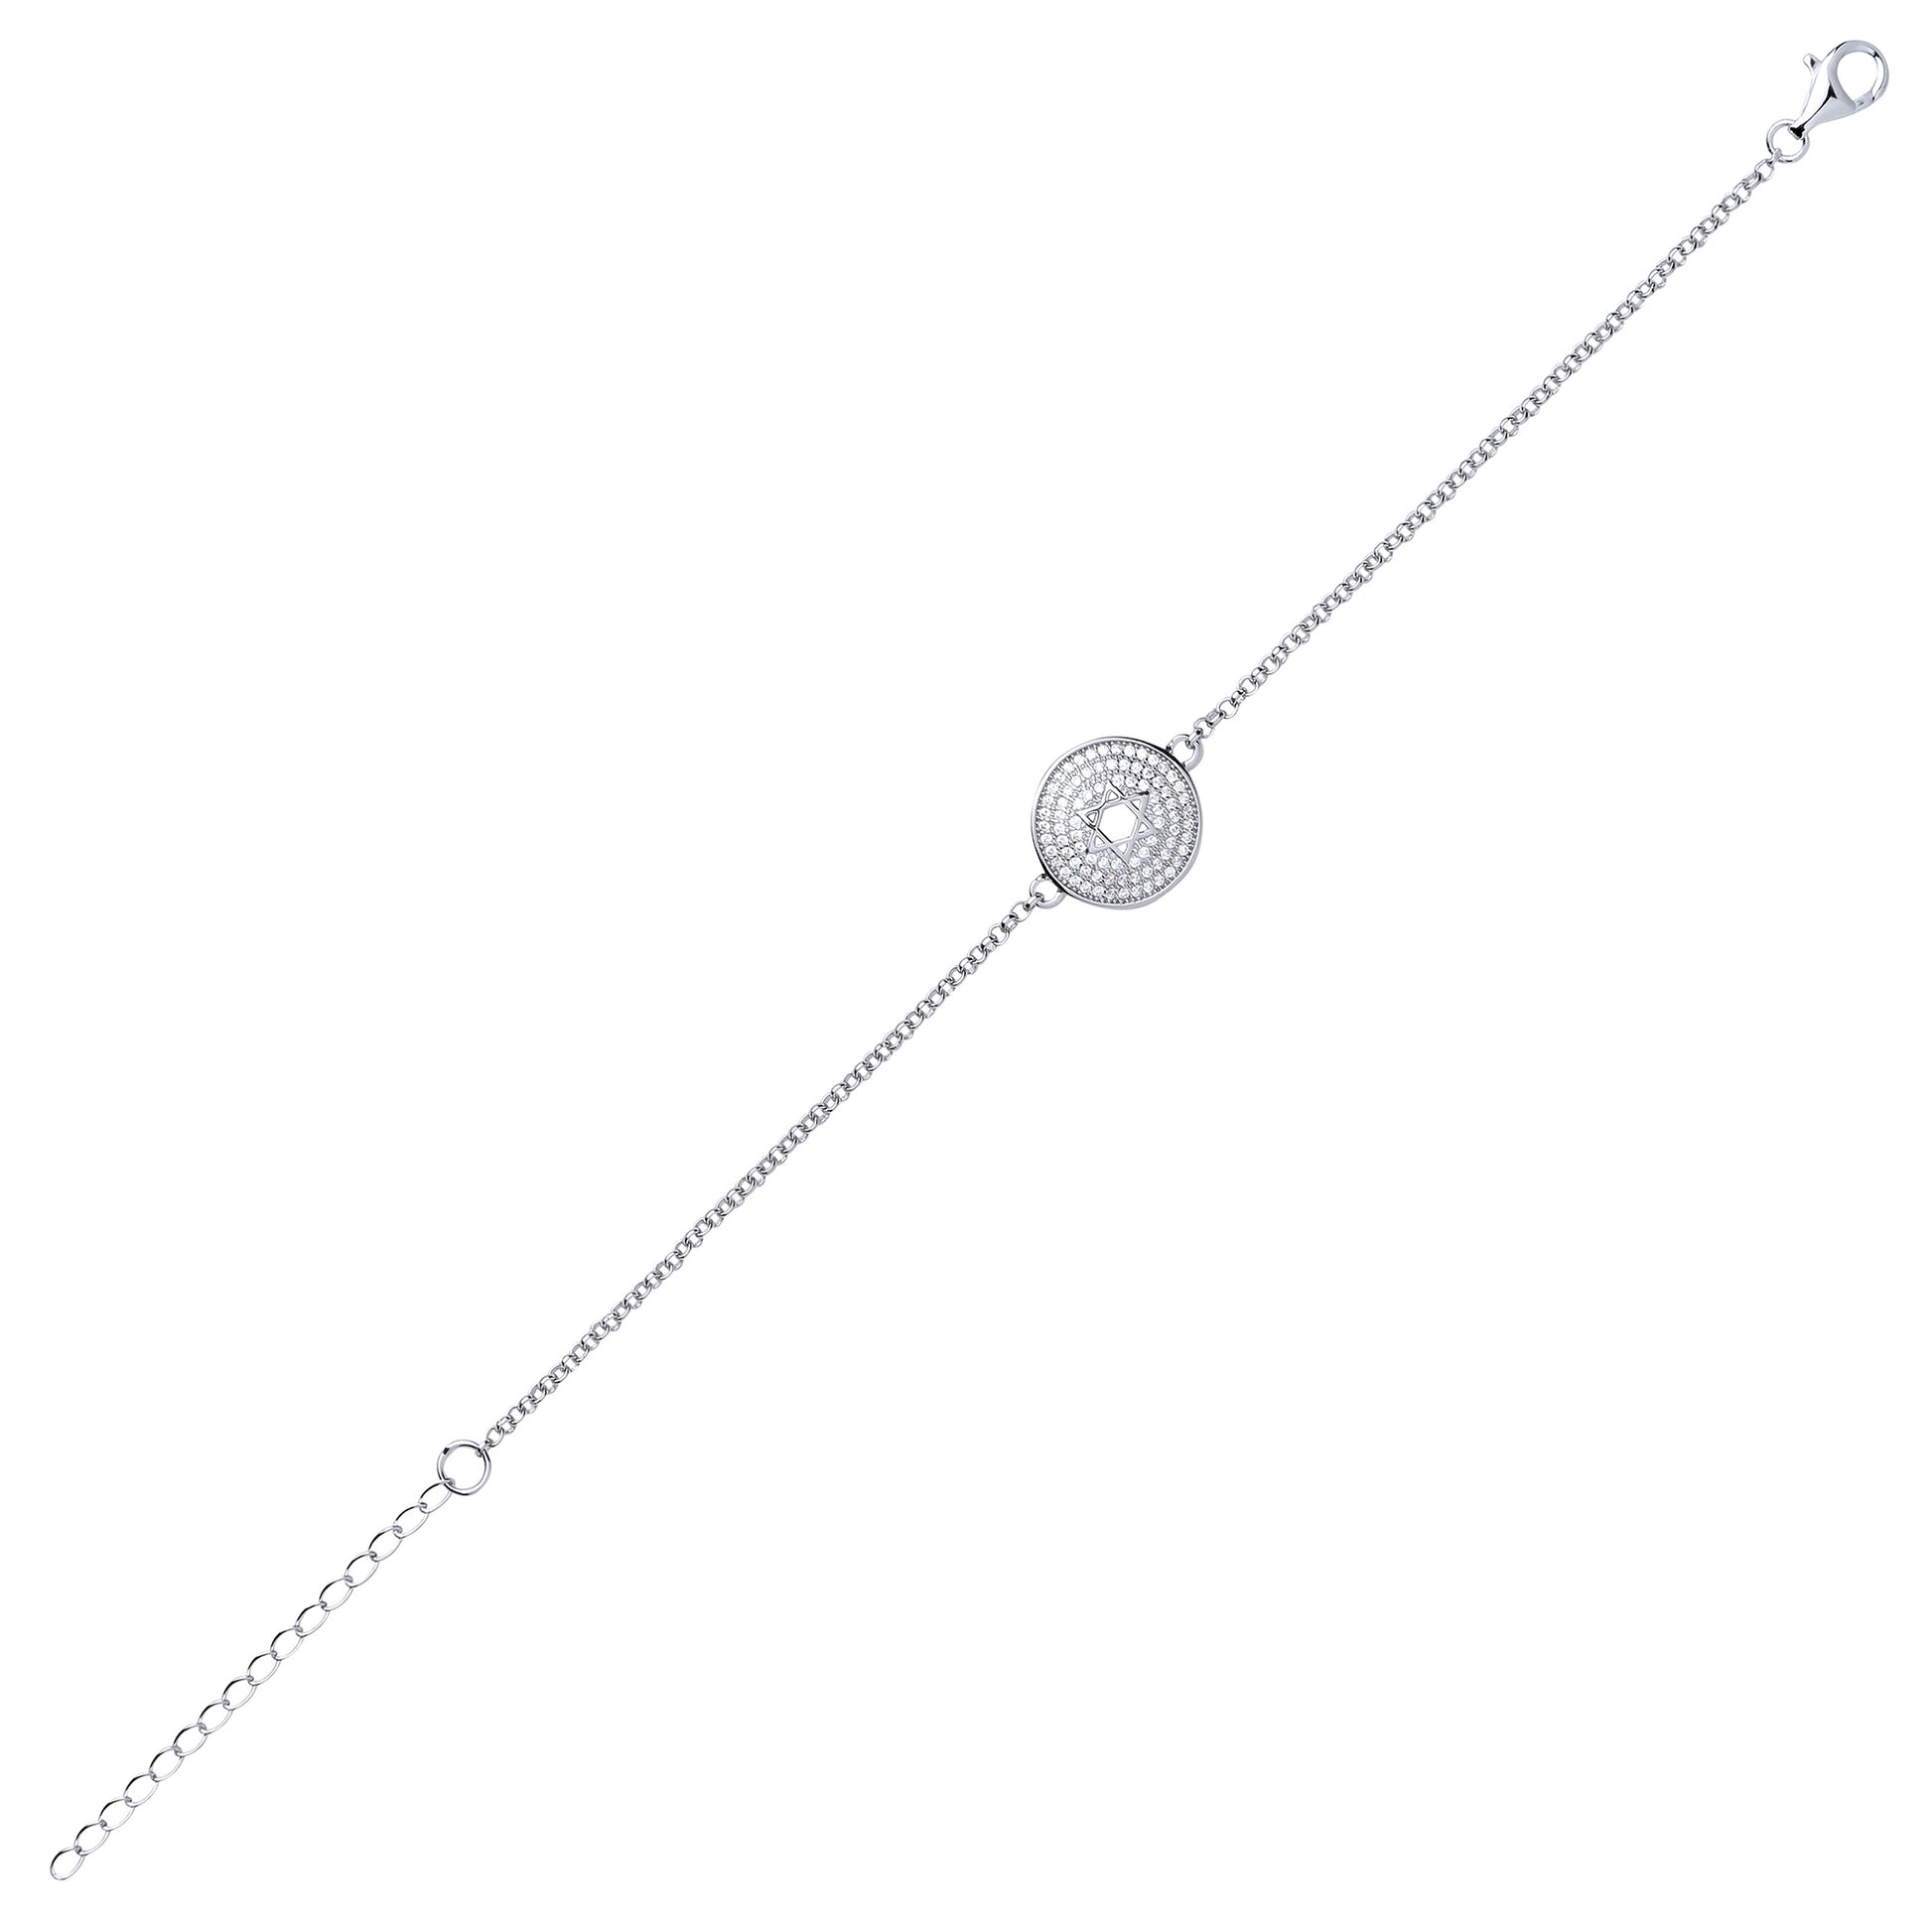 Silver  CZ Magen David Star Shield Charm Bracelet - GVB382